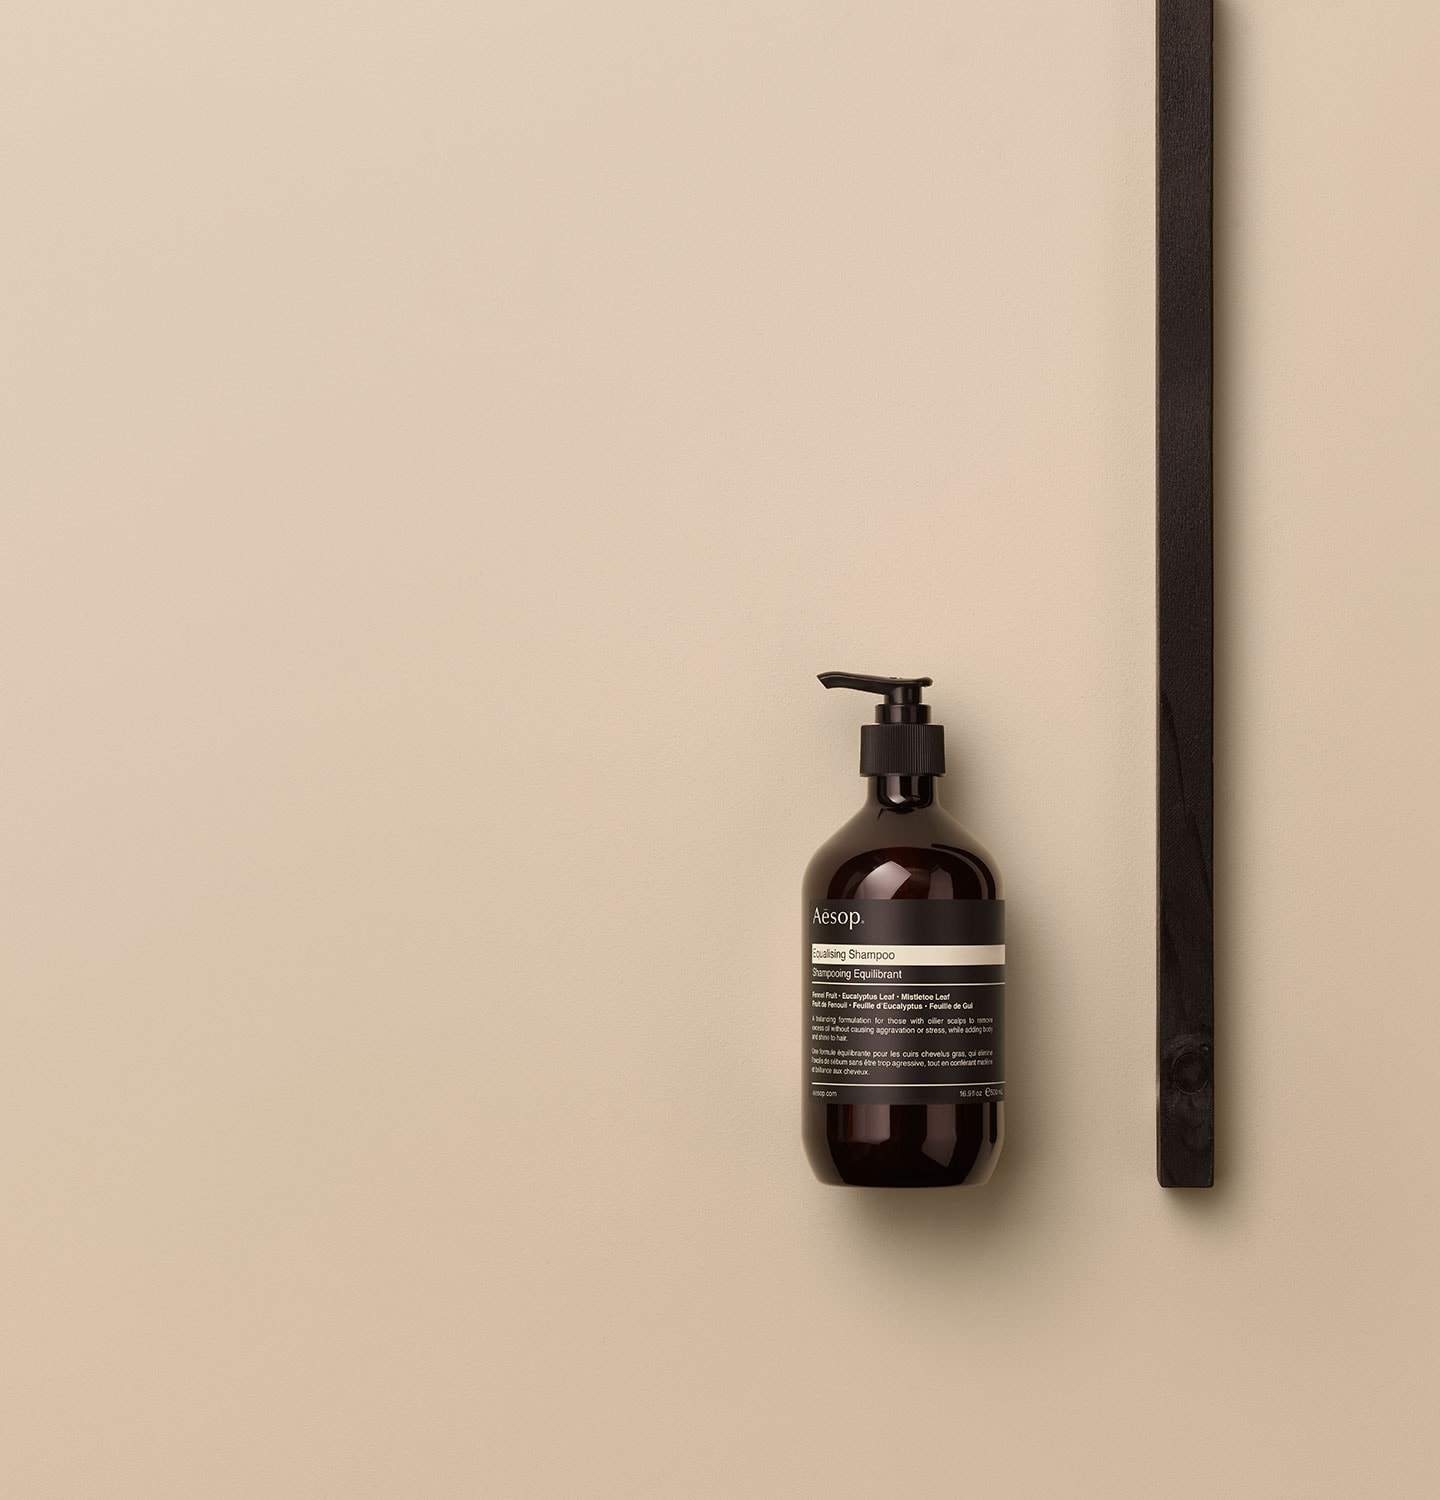 Aesop Equalising Shampoo in amber pump bottle arranged alongside a dark wooden object on a beige surface.